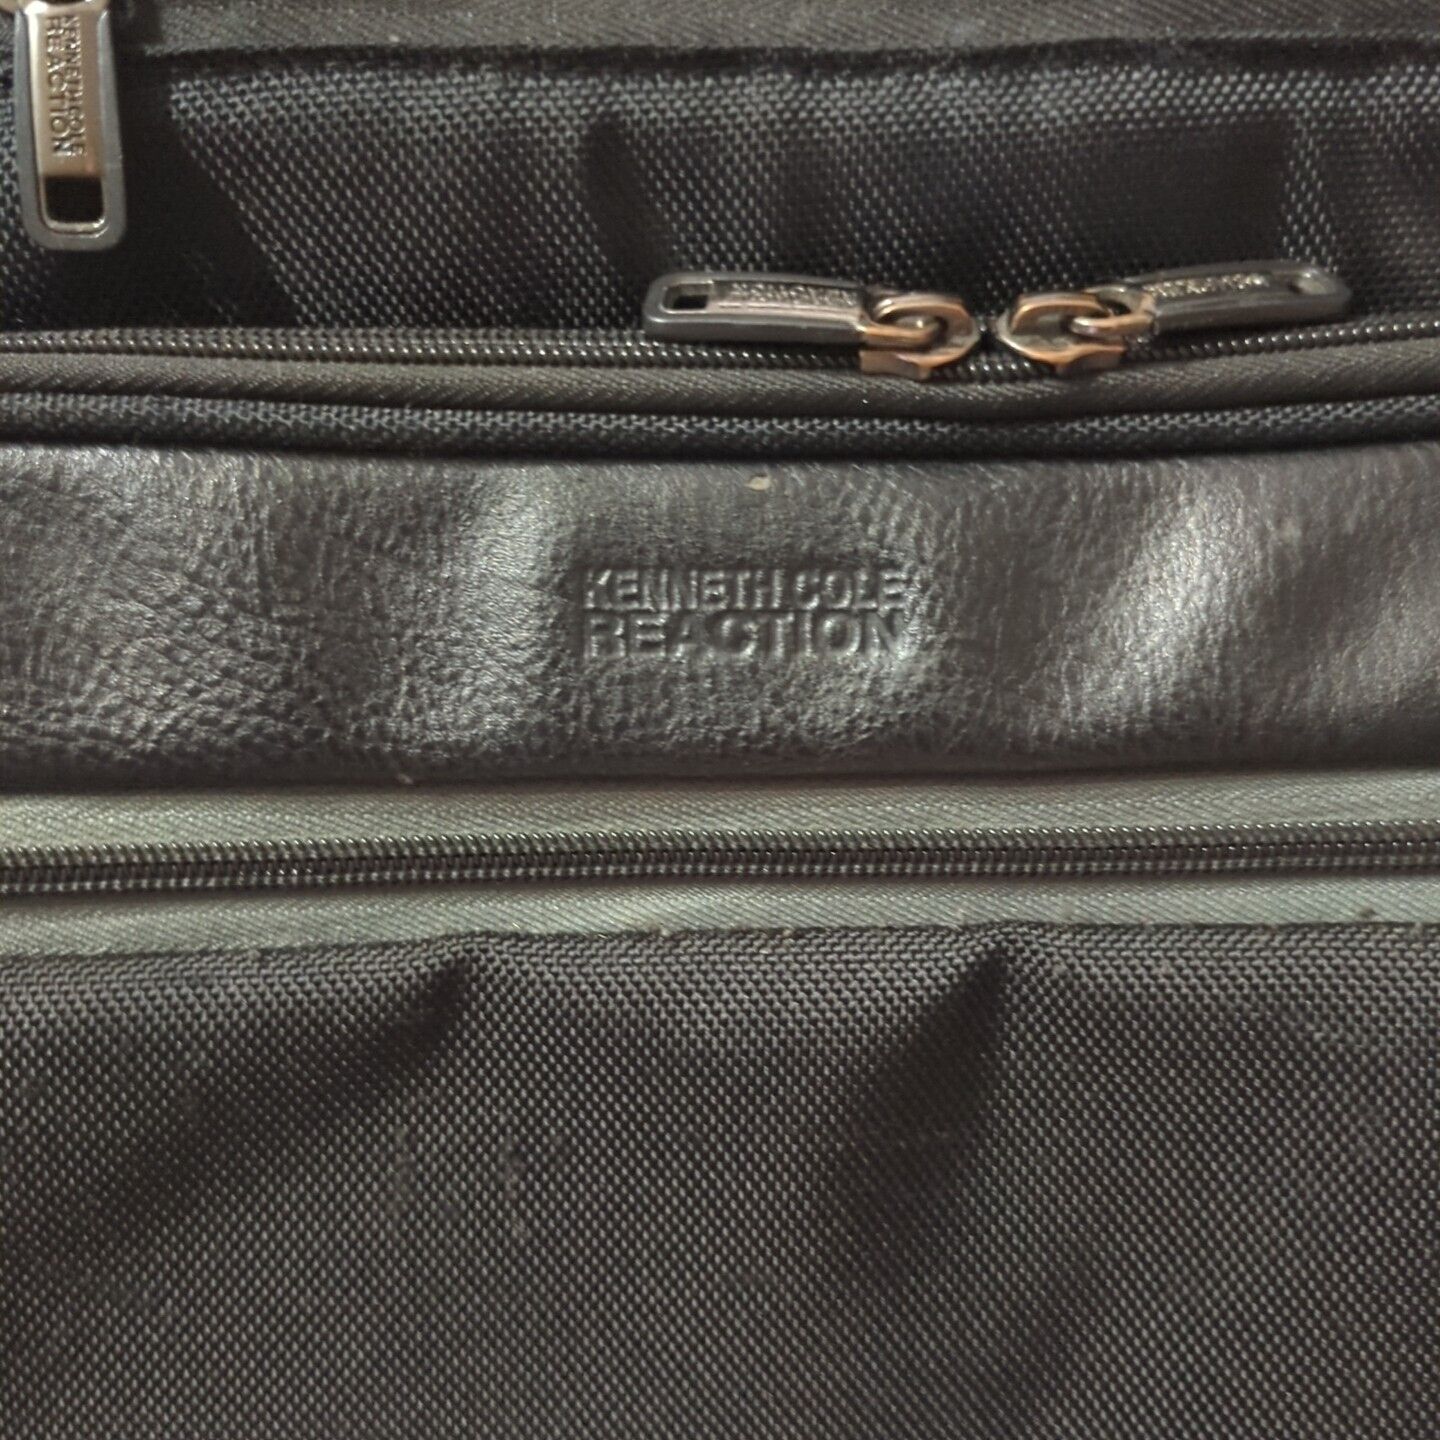 KENNETH COLE - REACTION MESSENGER BAG - EZ-SCAN Travel - Soft Briefcase Laptop